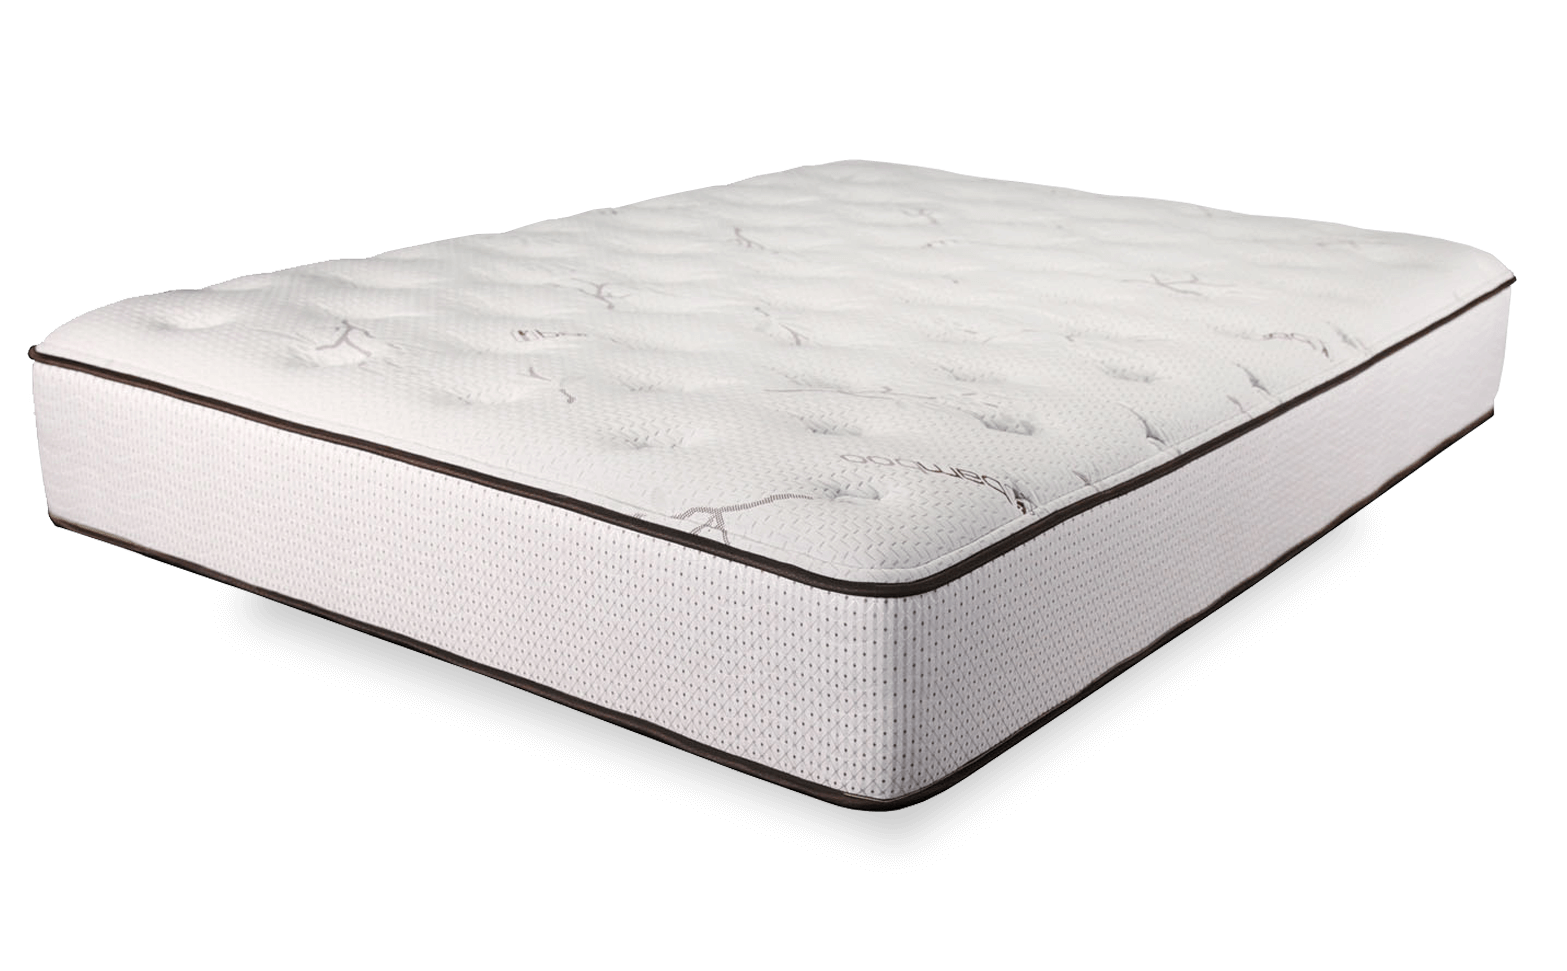 free vector air mattress